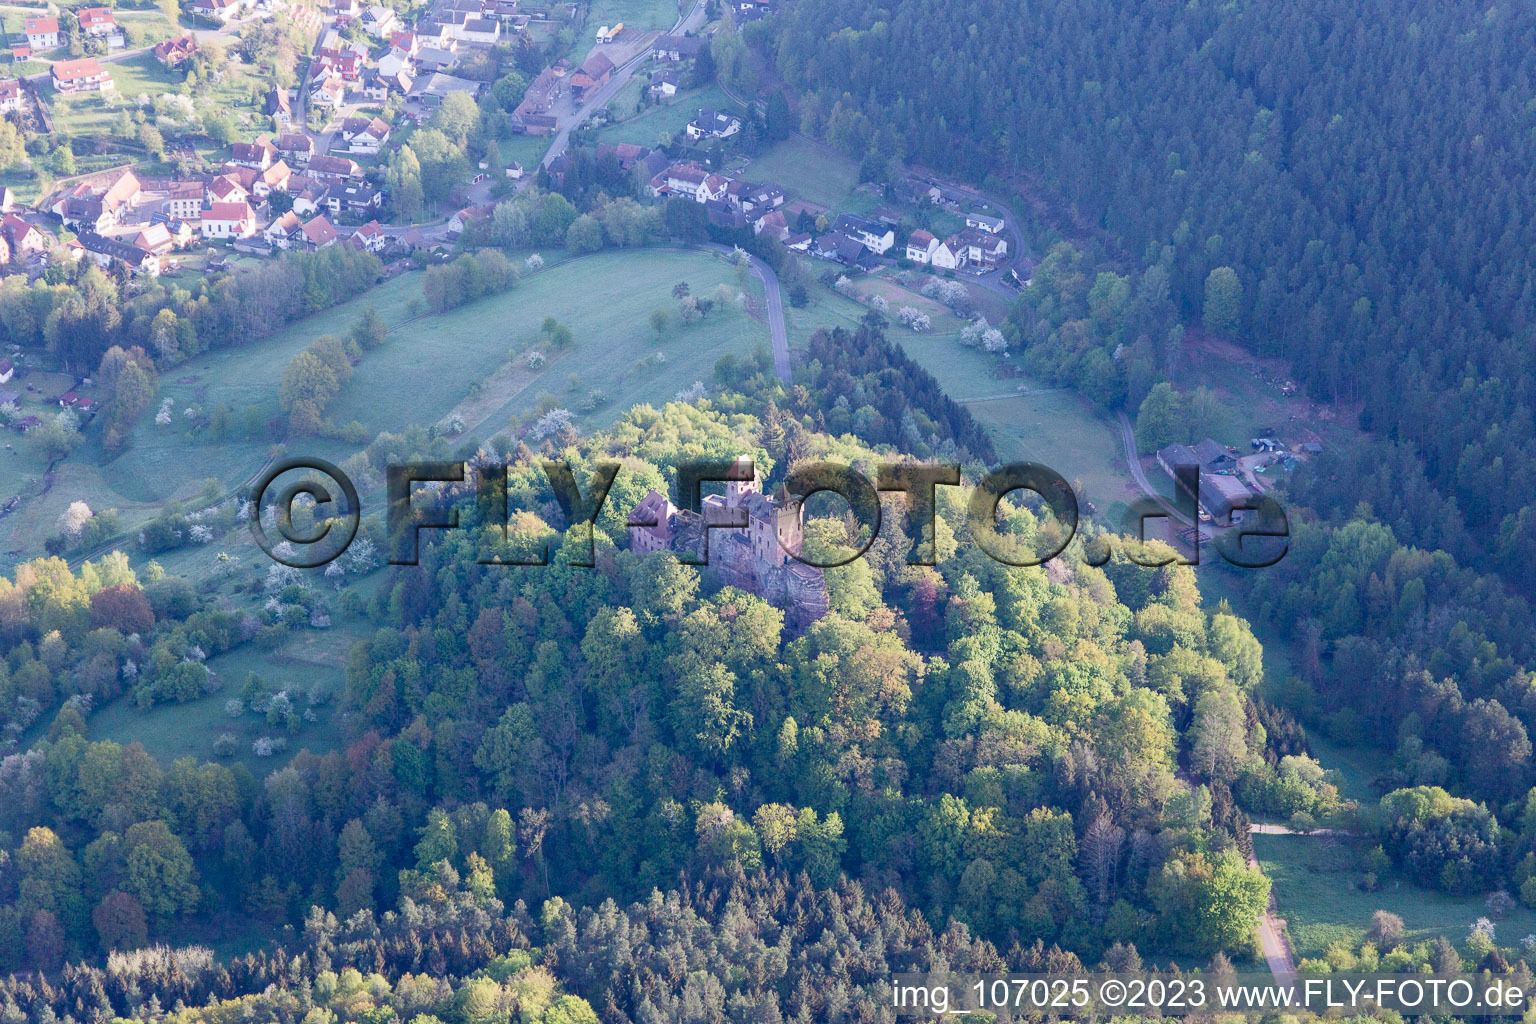 Oblique view of Bewartstein Castle in Erlenbach bei Dahn in the state Rhineland-Palatinate, Germany